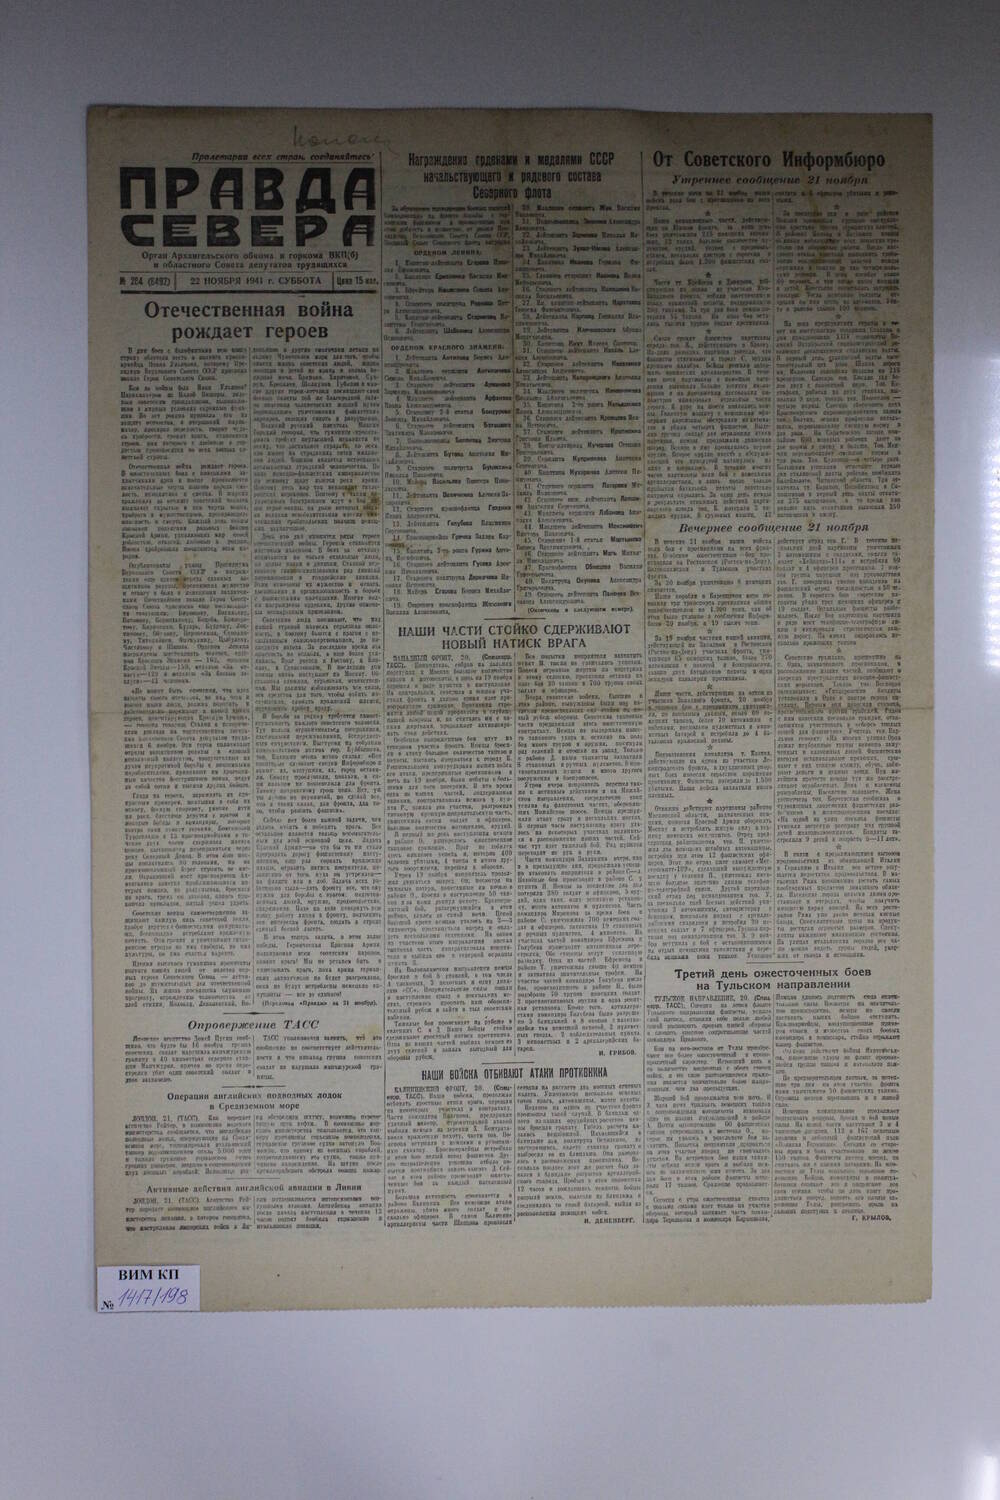 Газета Правда Севера № 284 (6492) от 22.11.1941 года.